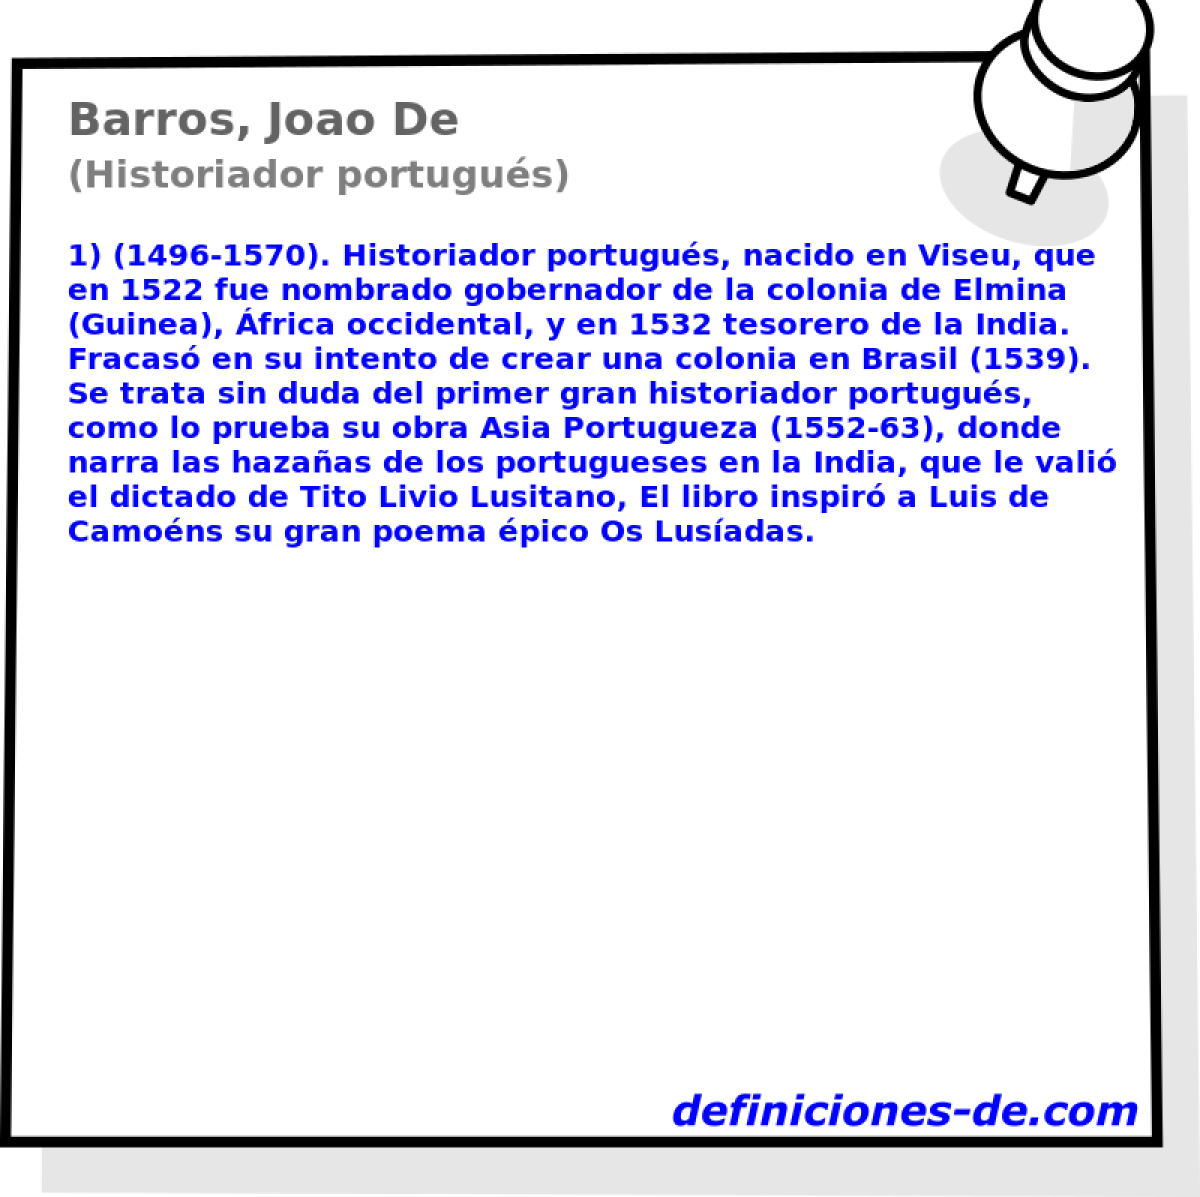 Barros, Joao De (Historiador portugus)